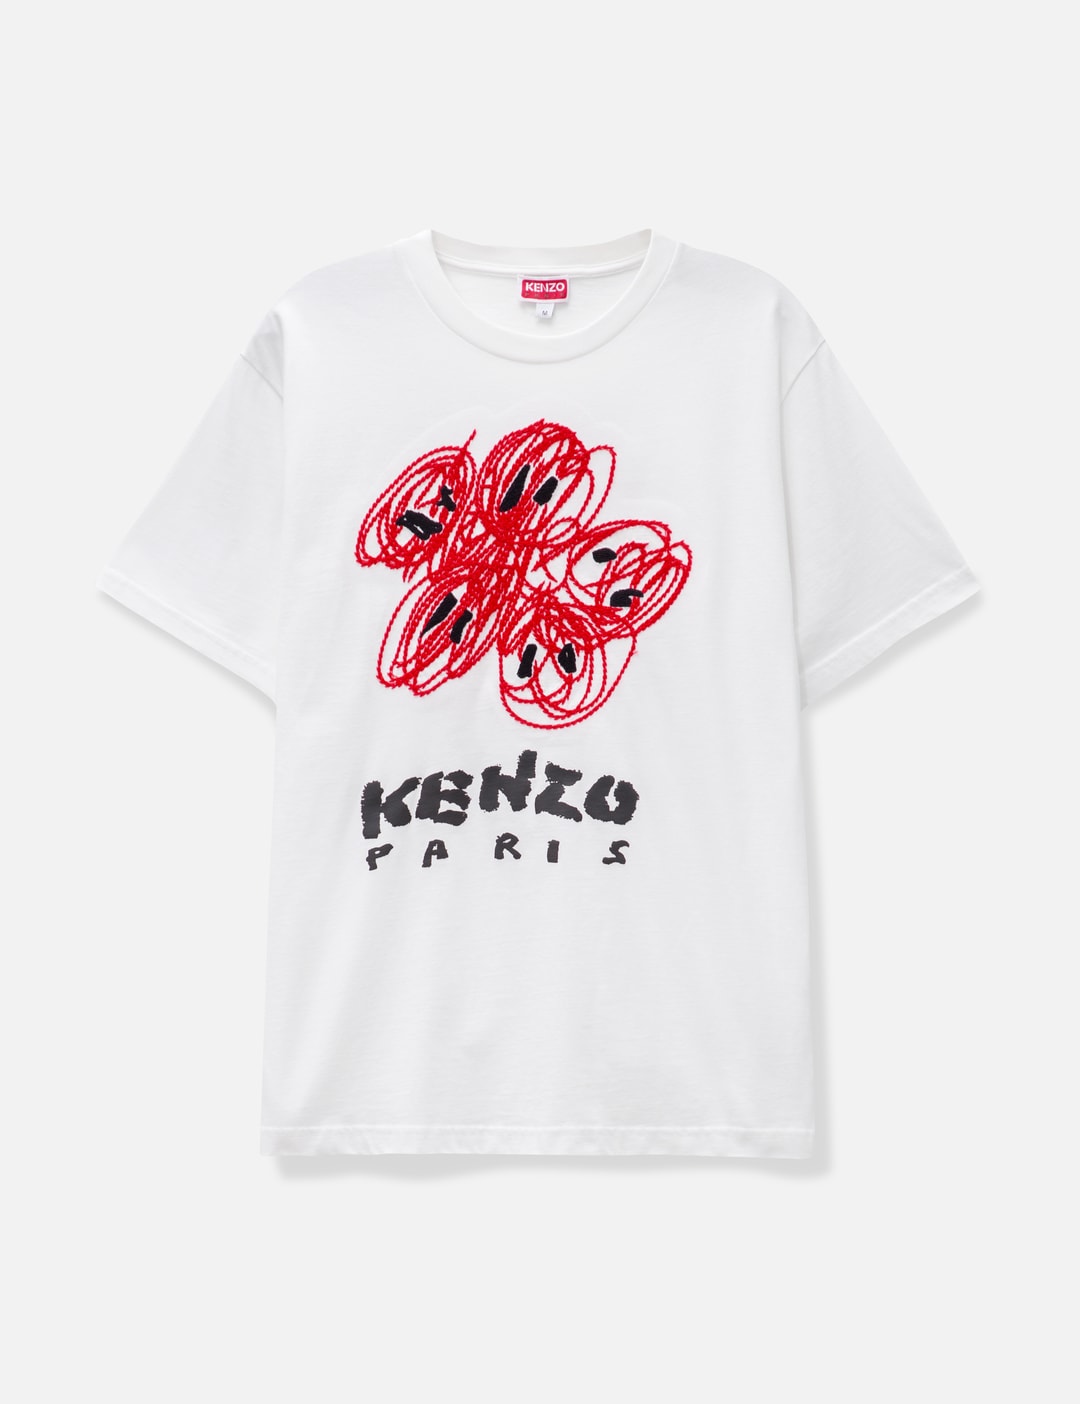 Kenzo - Drawn Varsity Classic T-shirt | HBX - Globally Curated Fashion ...